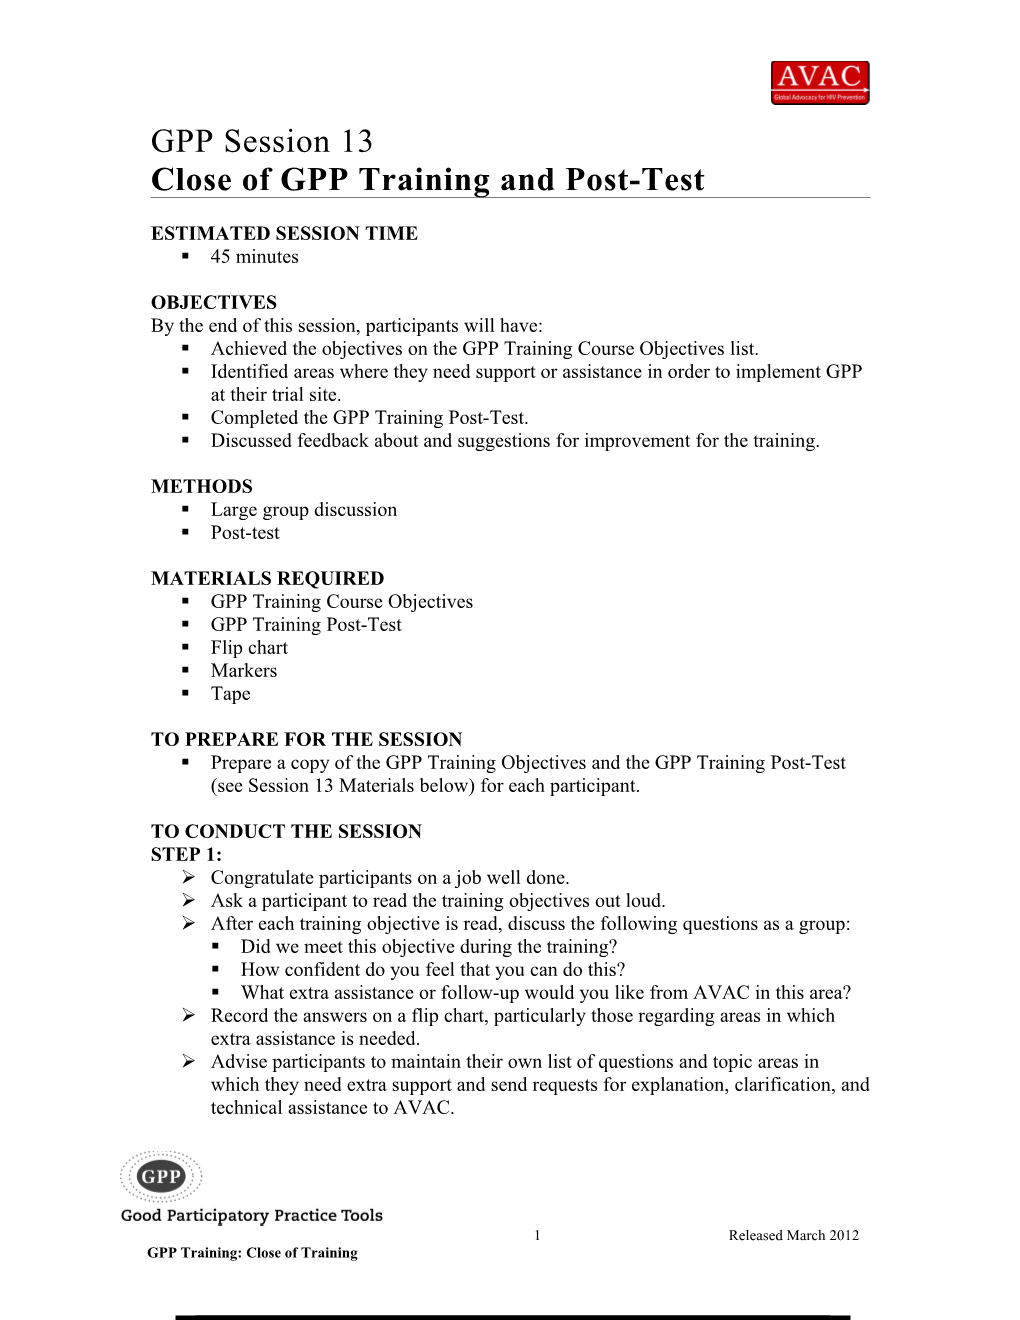 Close of GPP Training and Post-Test